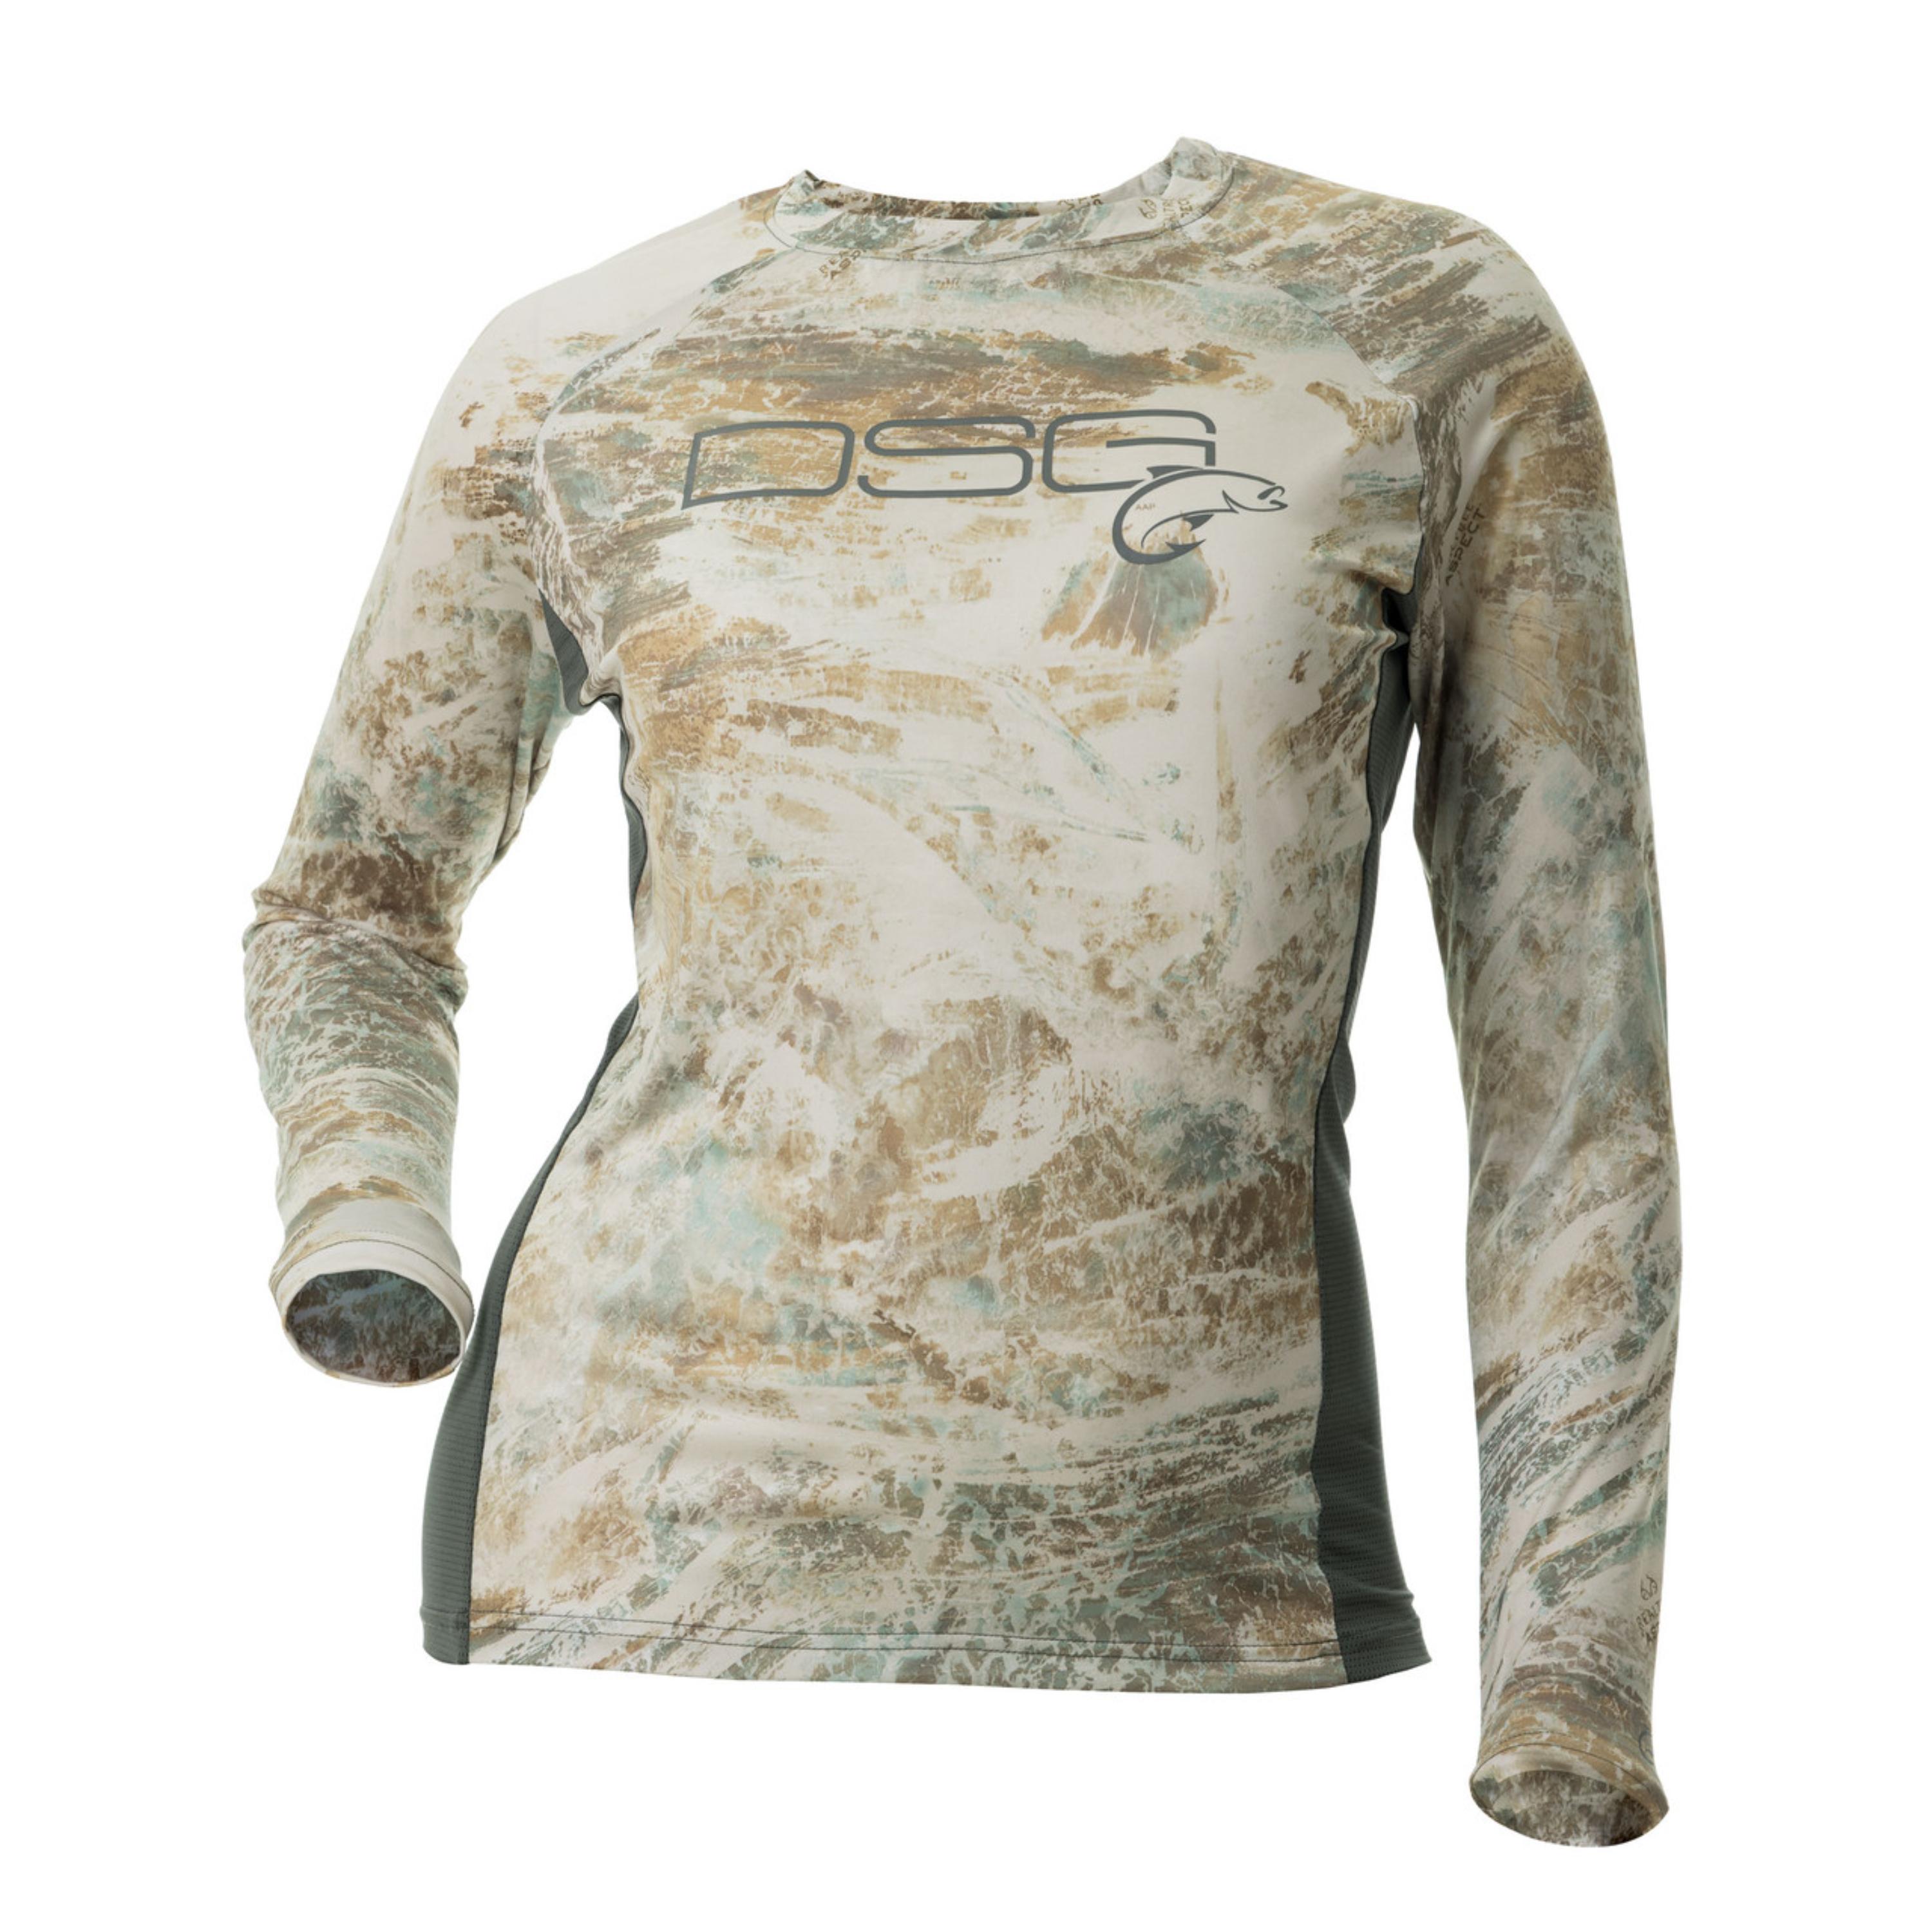 DSG Outerwear Sydney Long Sleeve Shirt - Realtree Aspect Key West/sage, Women's, Size: Large, Beige